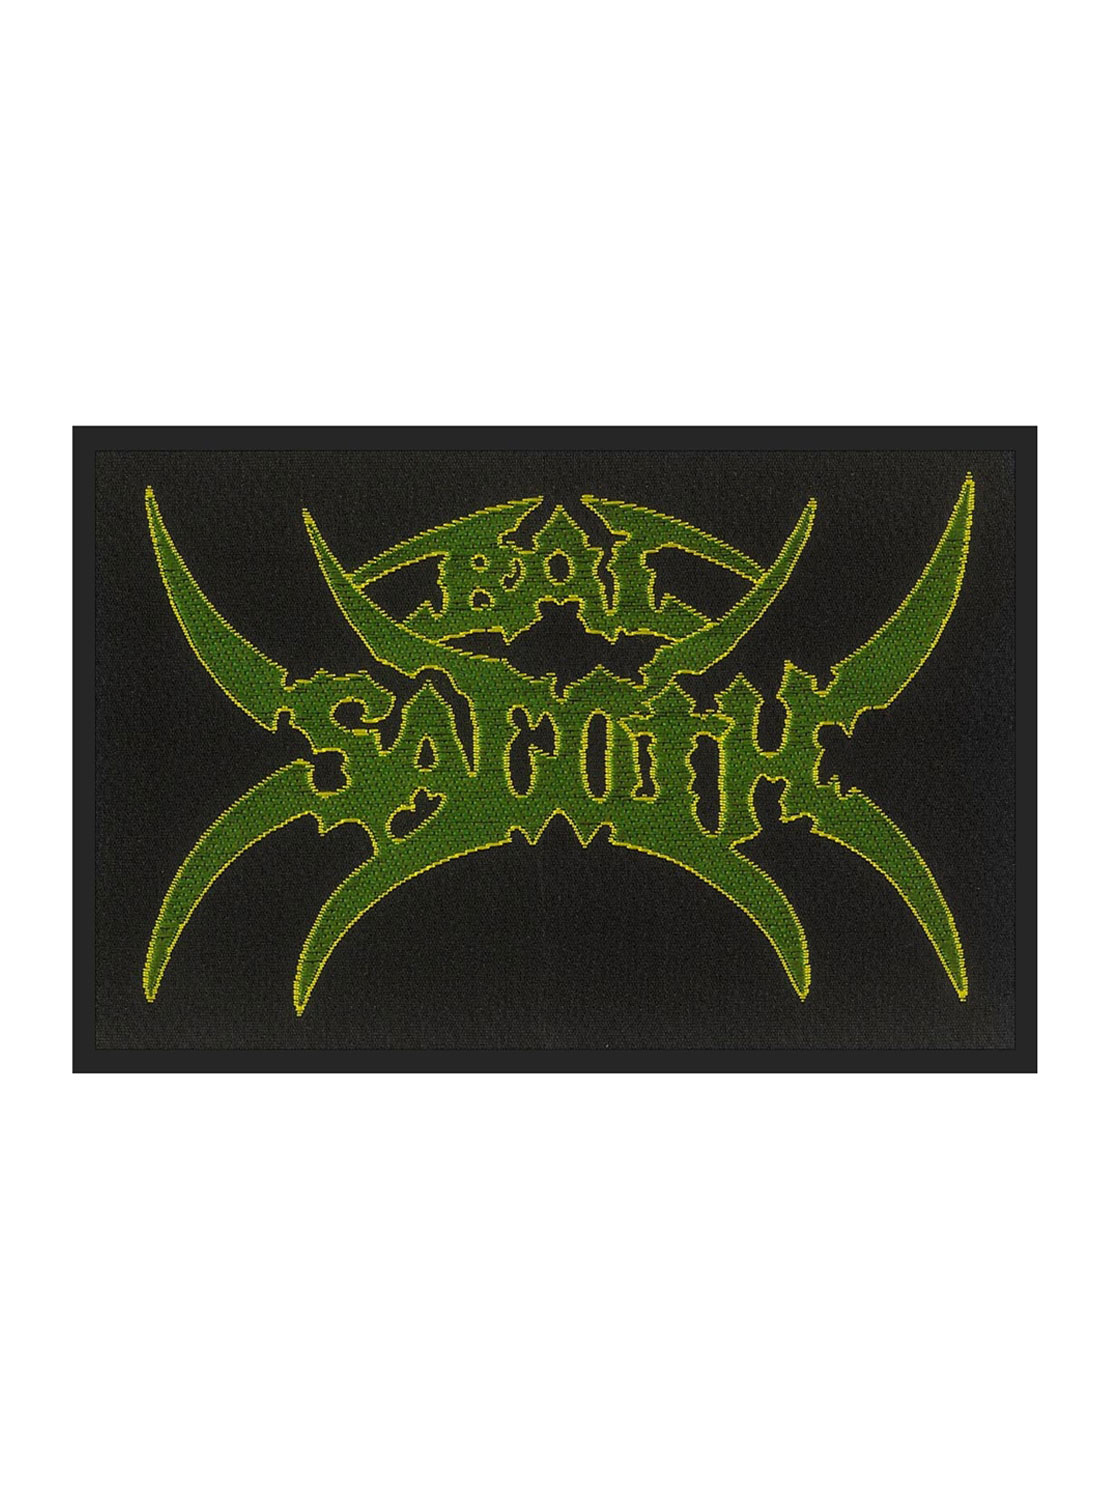 Bal Sagoth Logo Patch